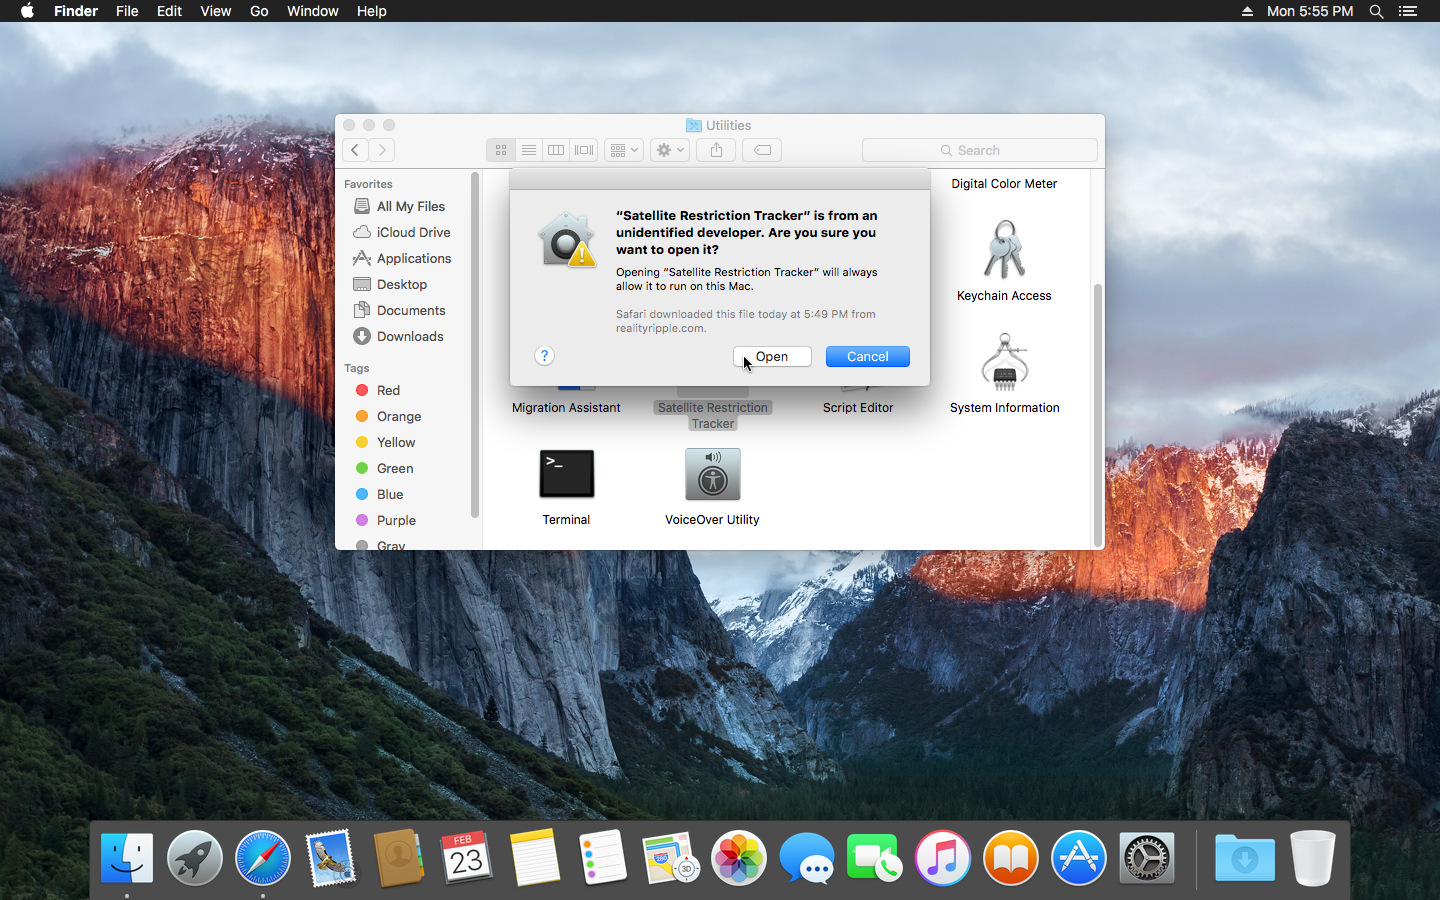 macOS 10.11
🍎